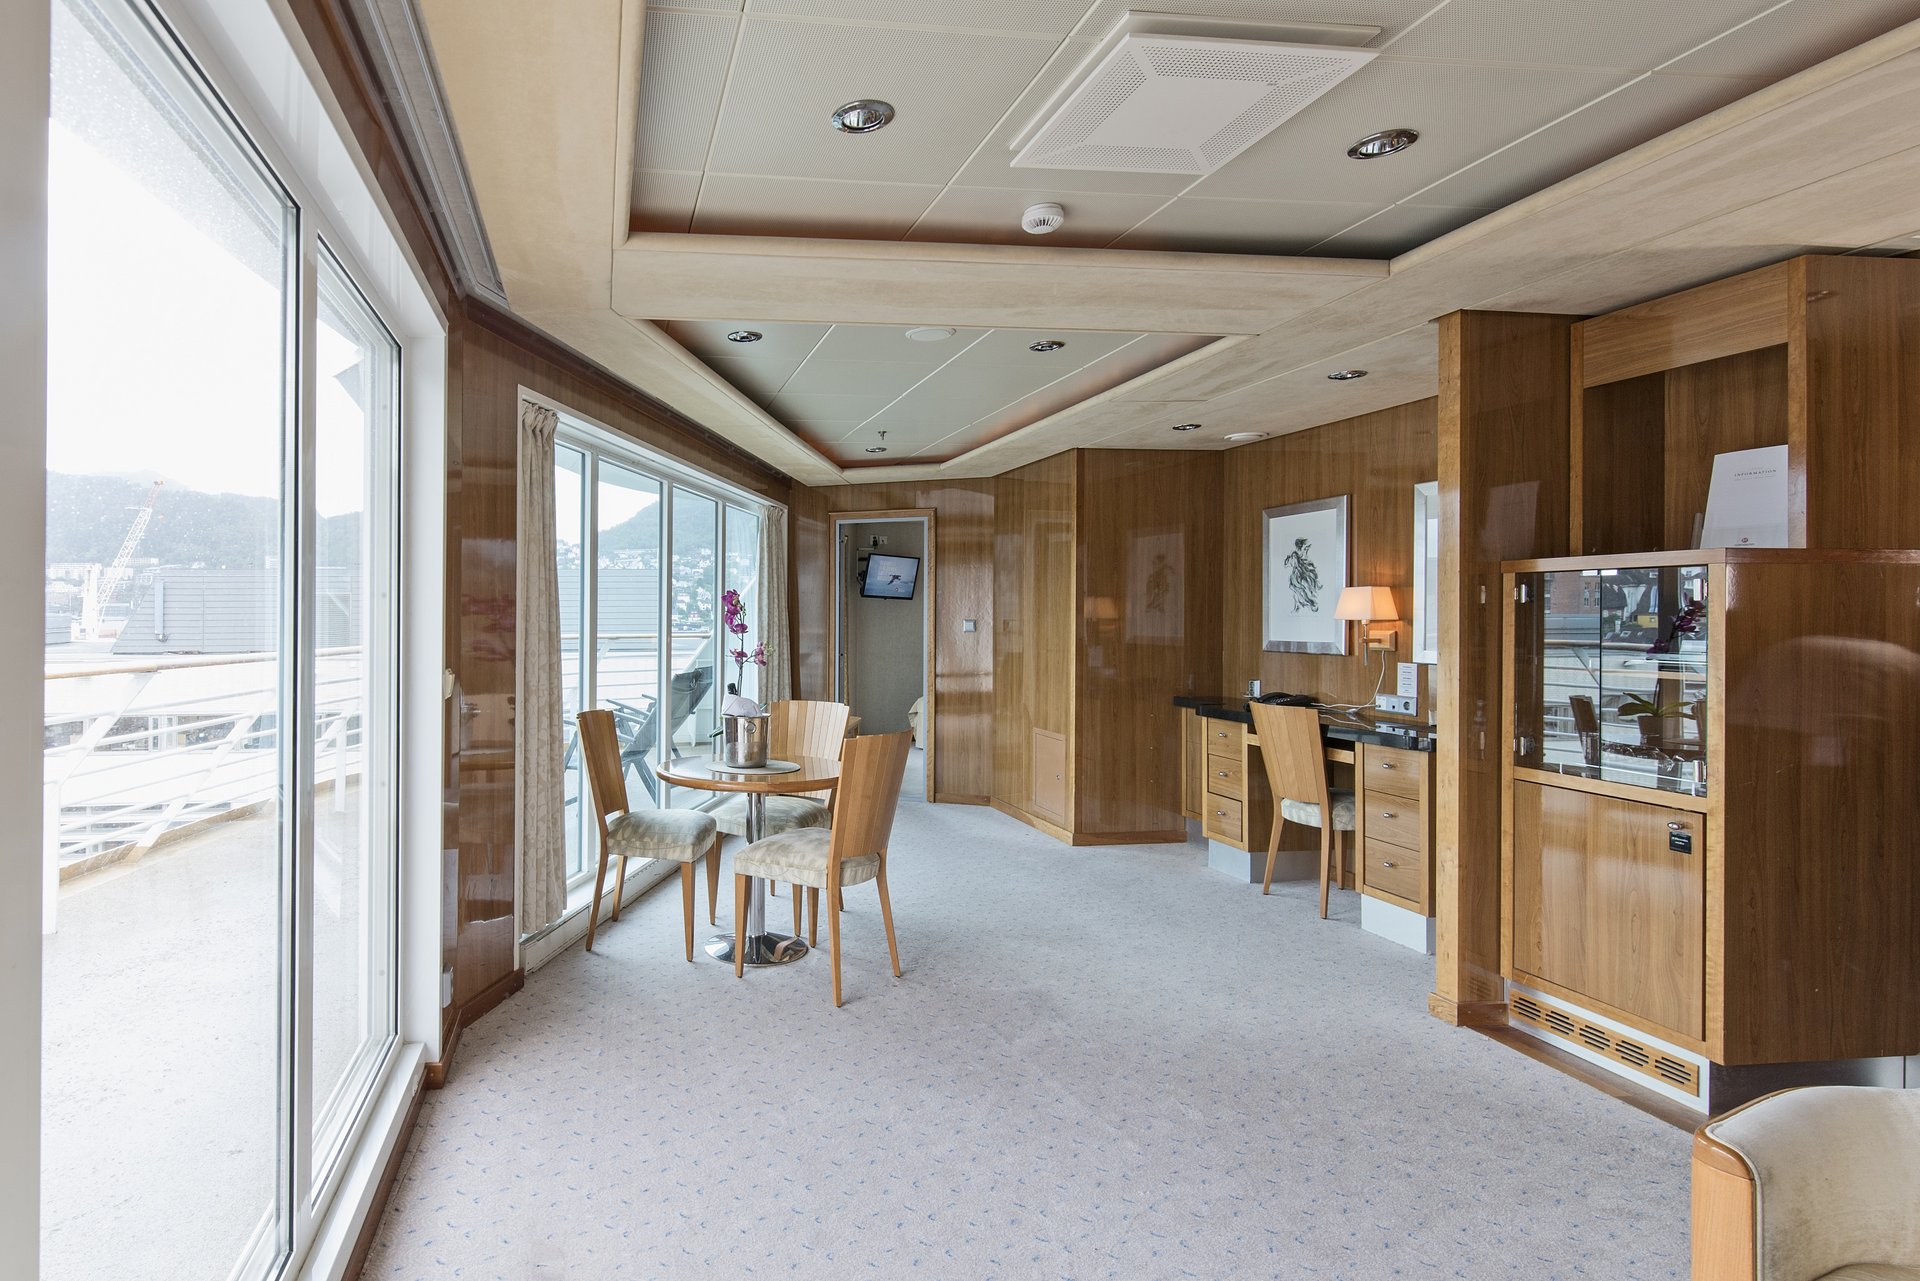 Expedition-Suite, Kategorie MX, 825-2, MS Trollfjord, (c) Agurtxane Concellon, Hurtigruten